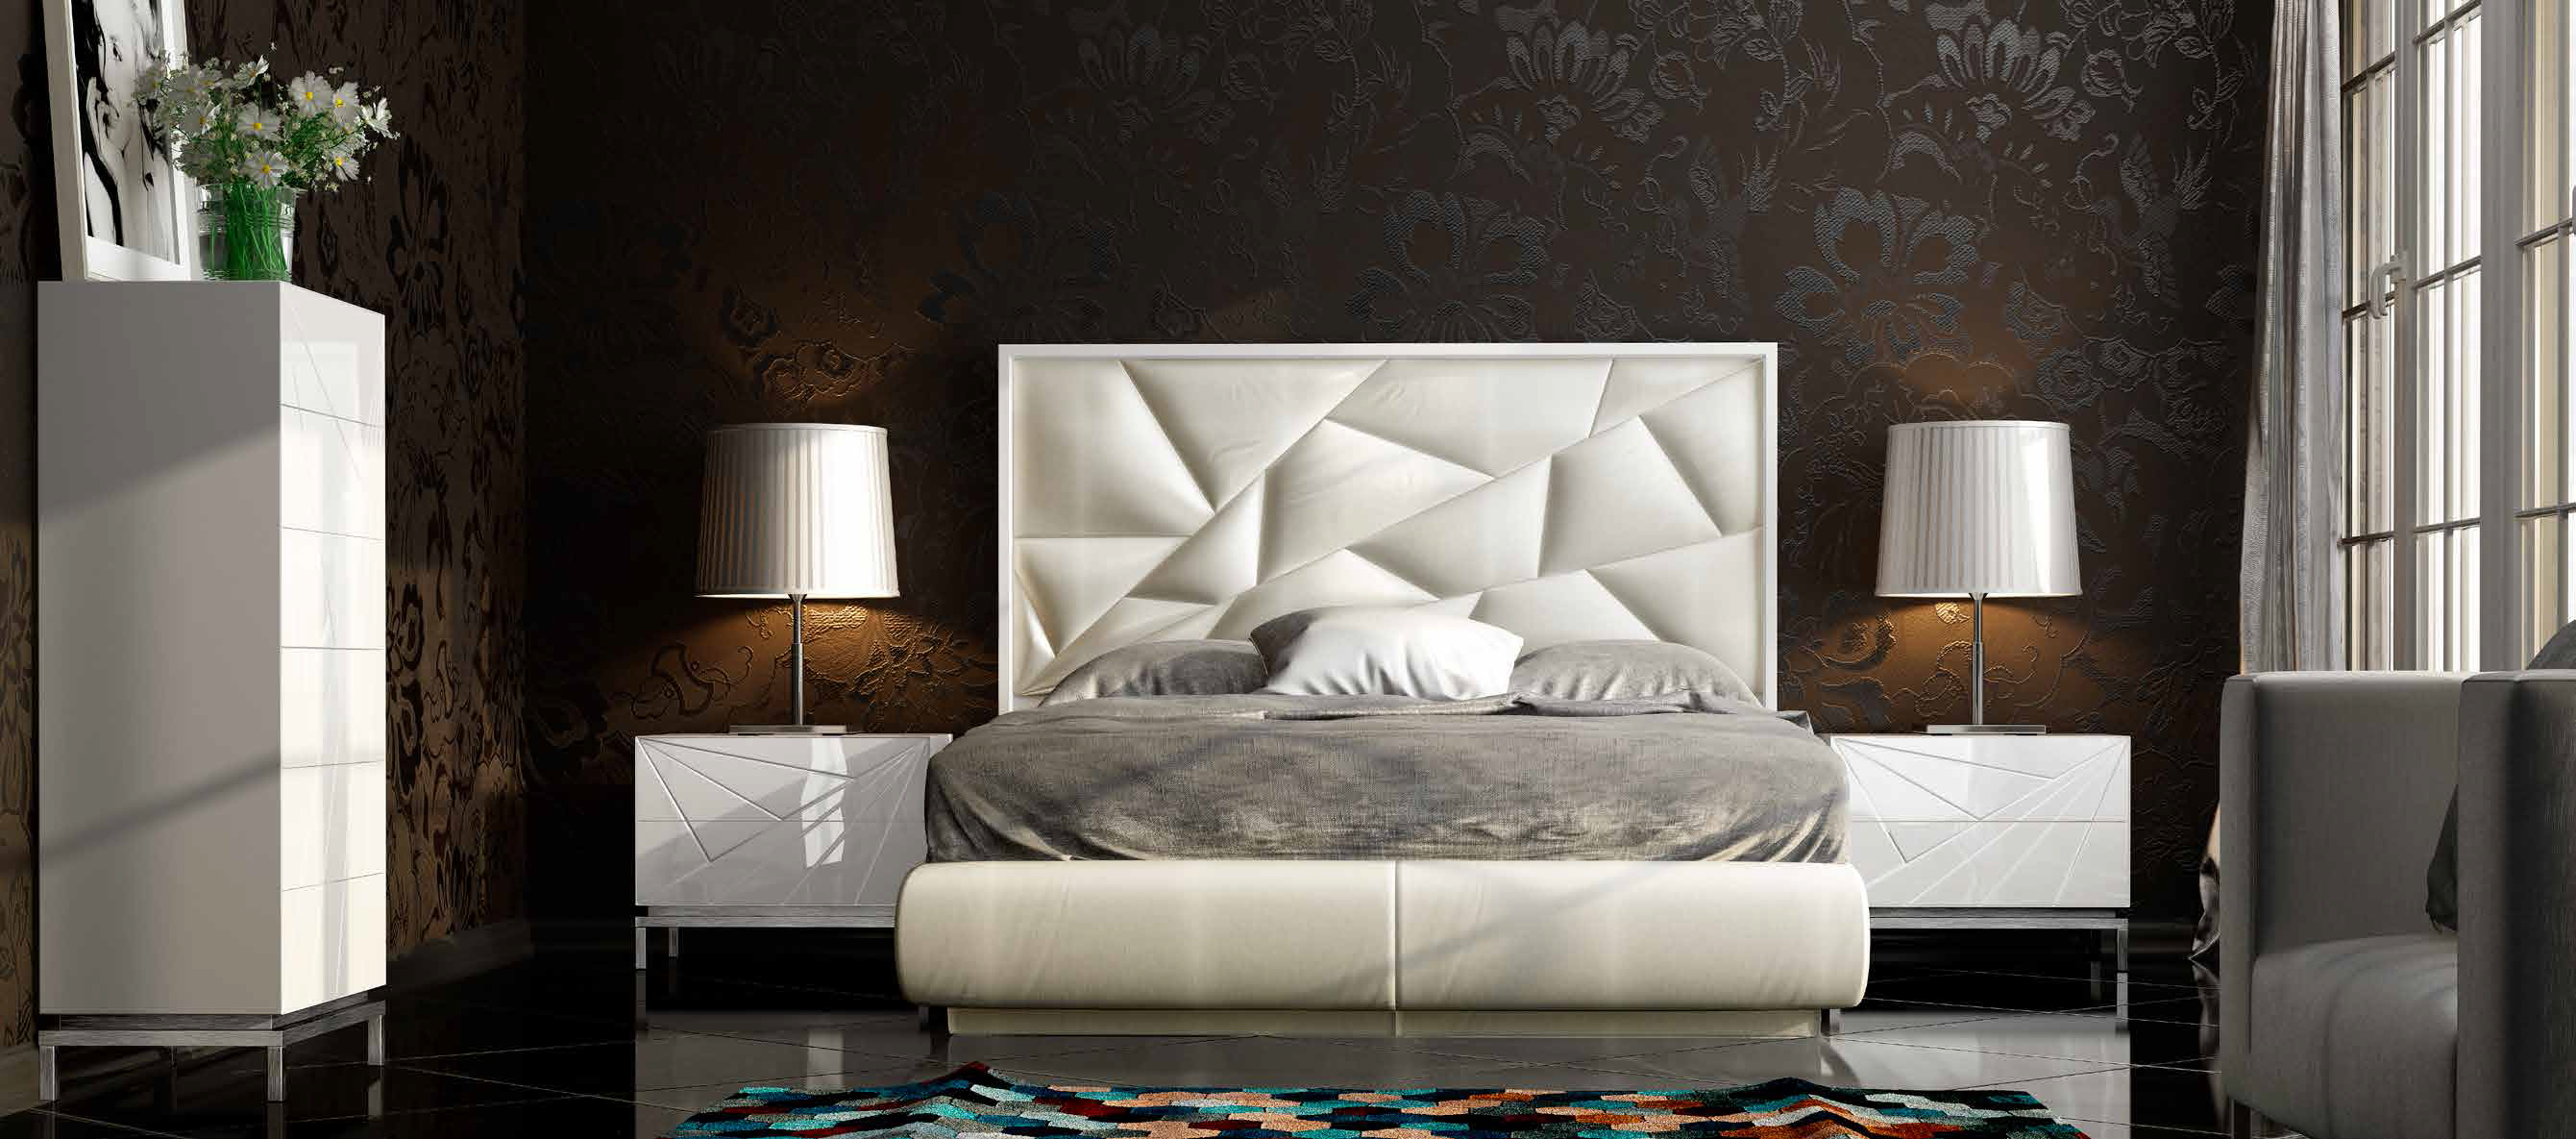 Brands Franco Furniture Bedrooms vol3, Spain DOR 20